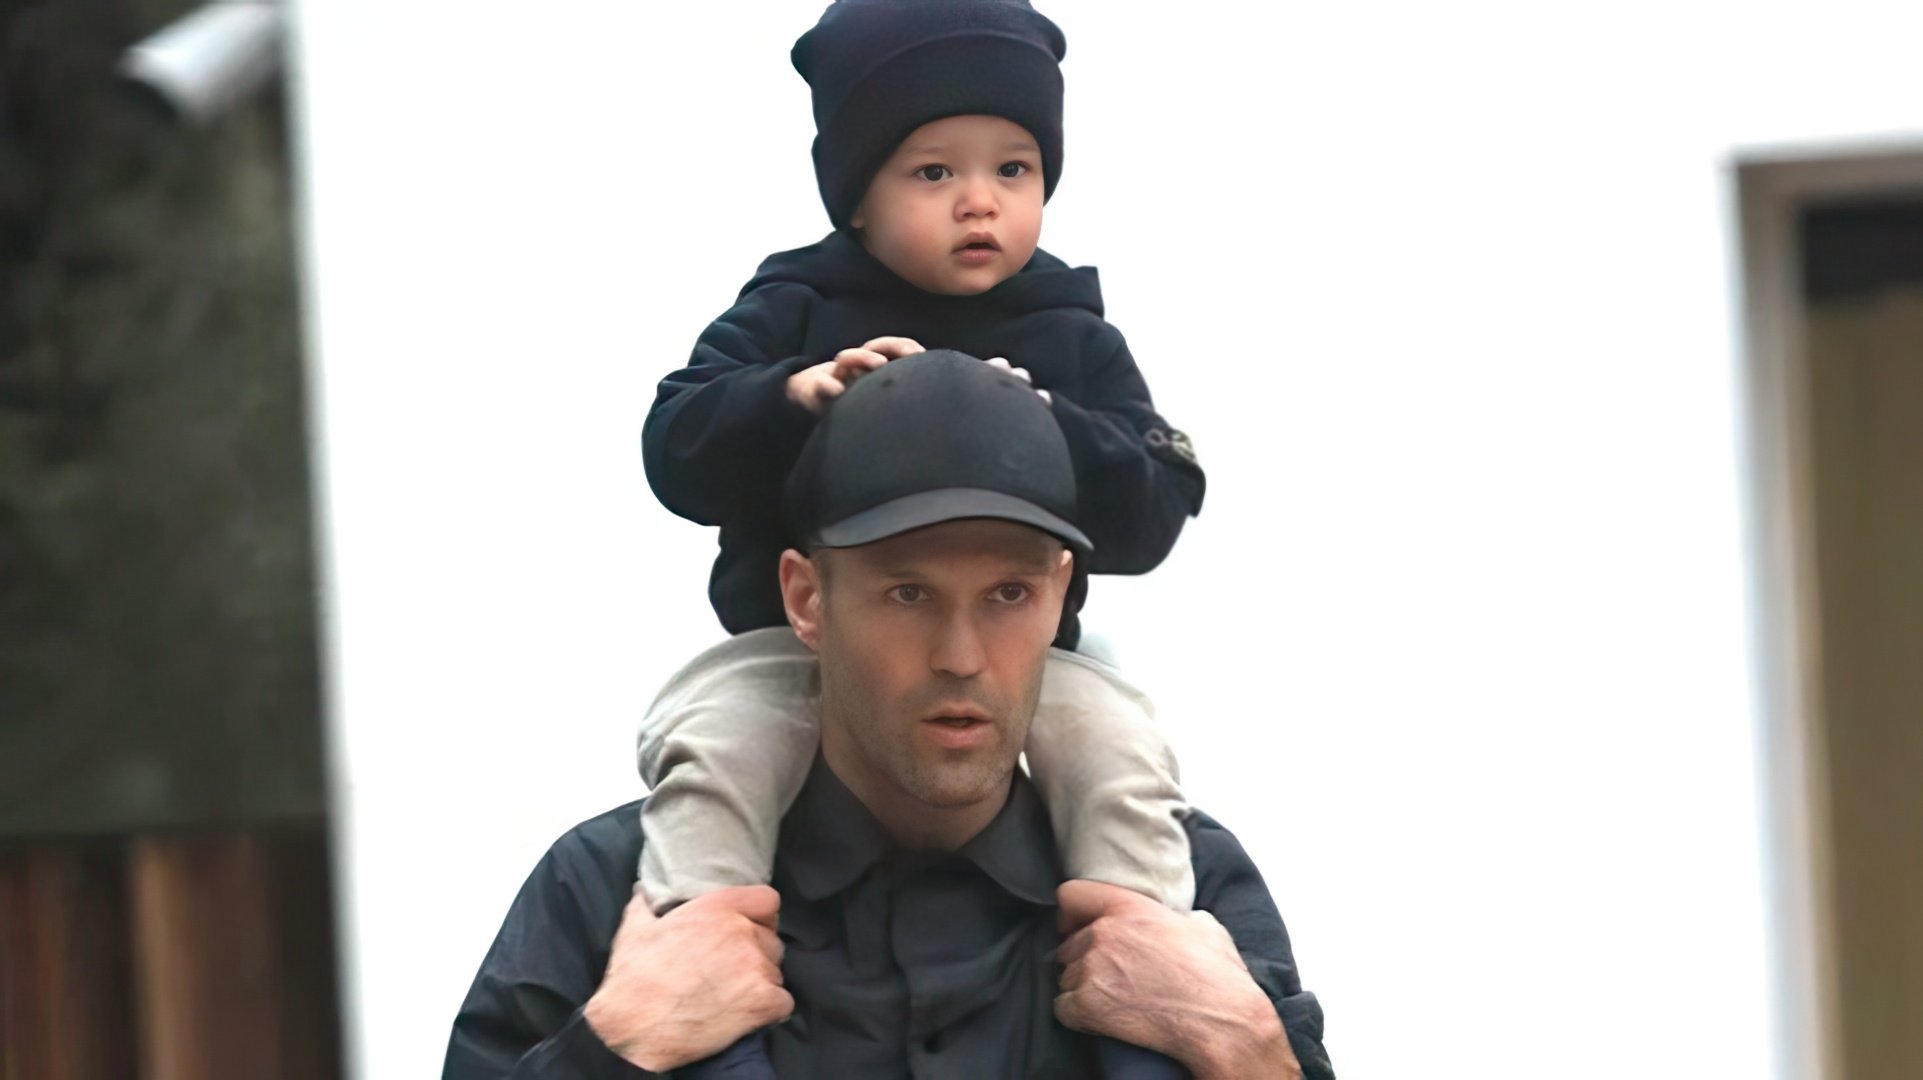 Jason Statham and his son Jack